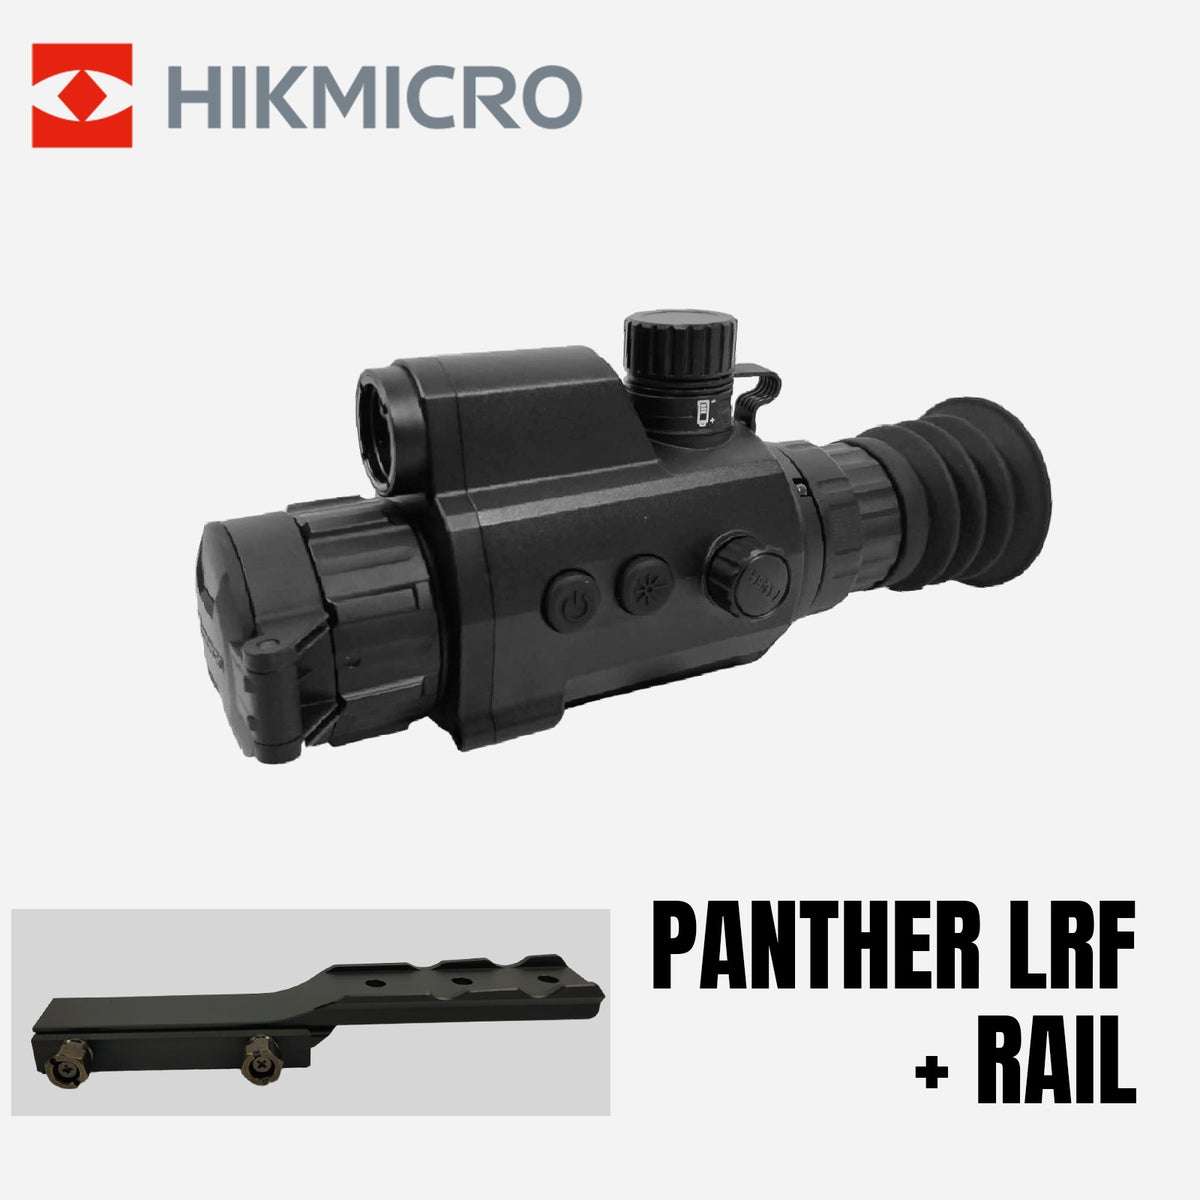 HIKMICRO PANTHER LRF 2.0 + Rail